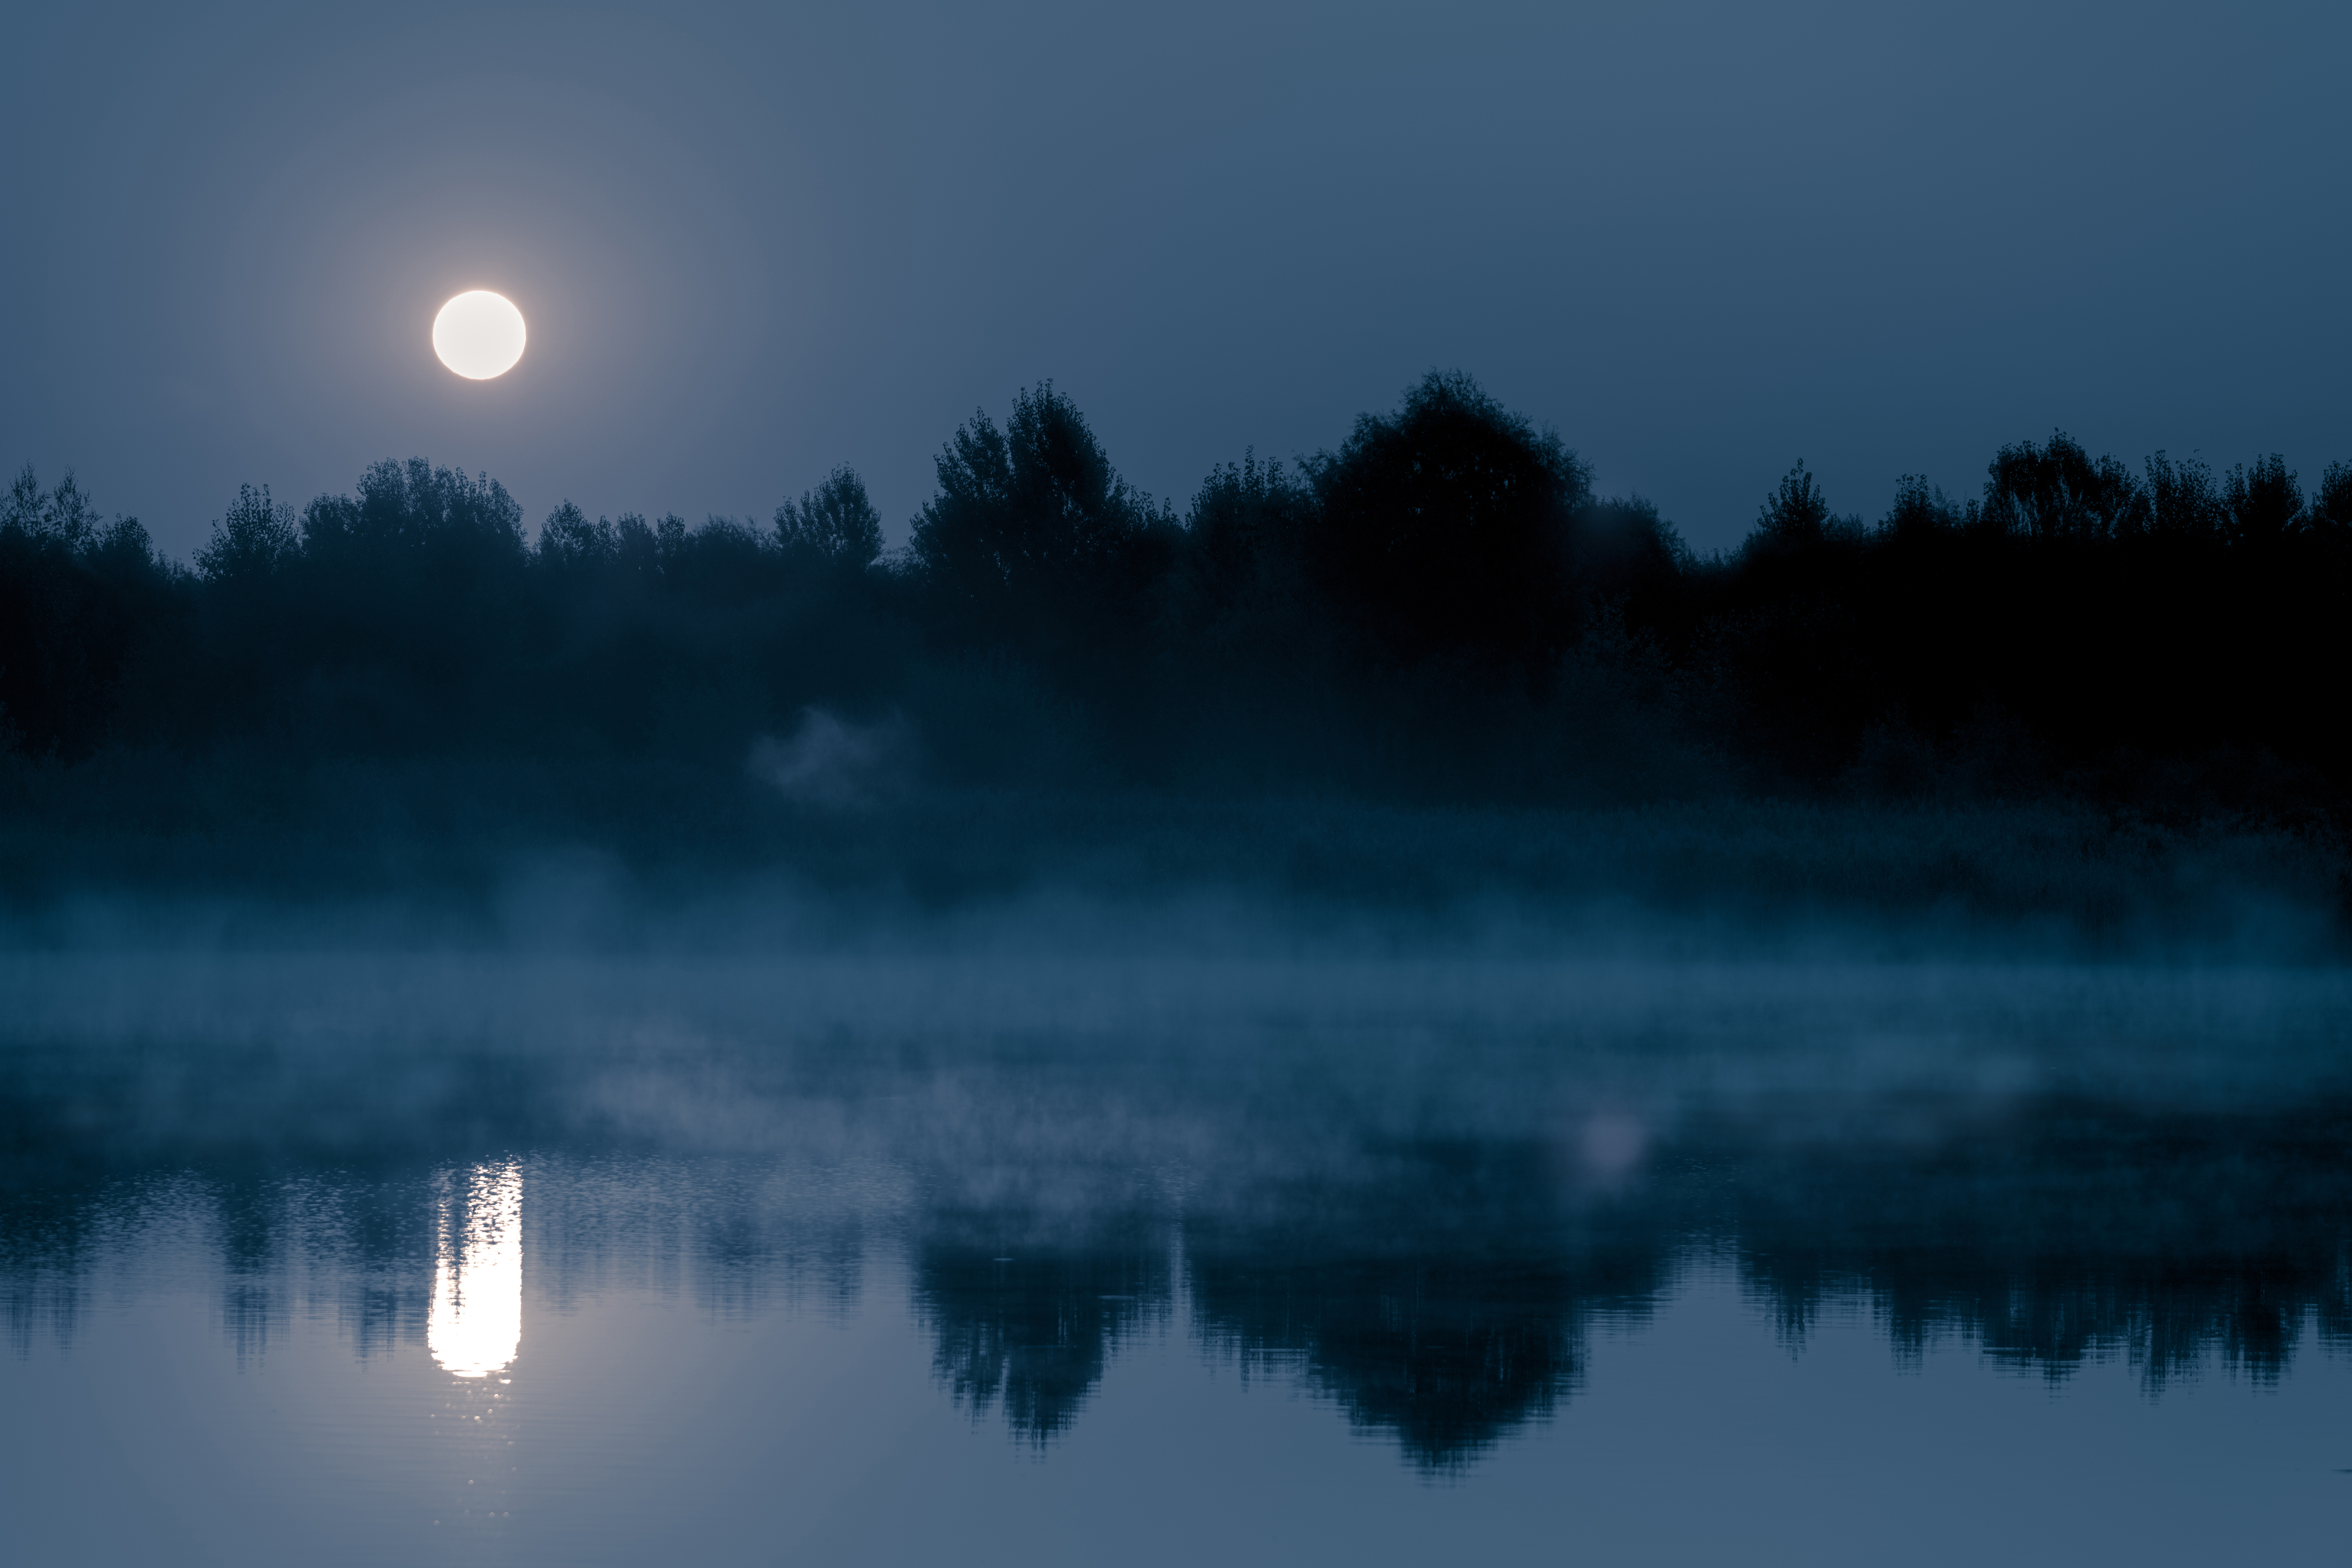 Paisaje místico nocturno | Fuente: Shutterstock